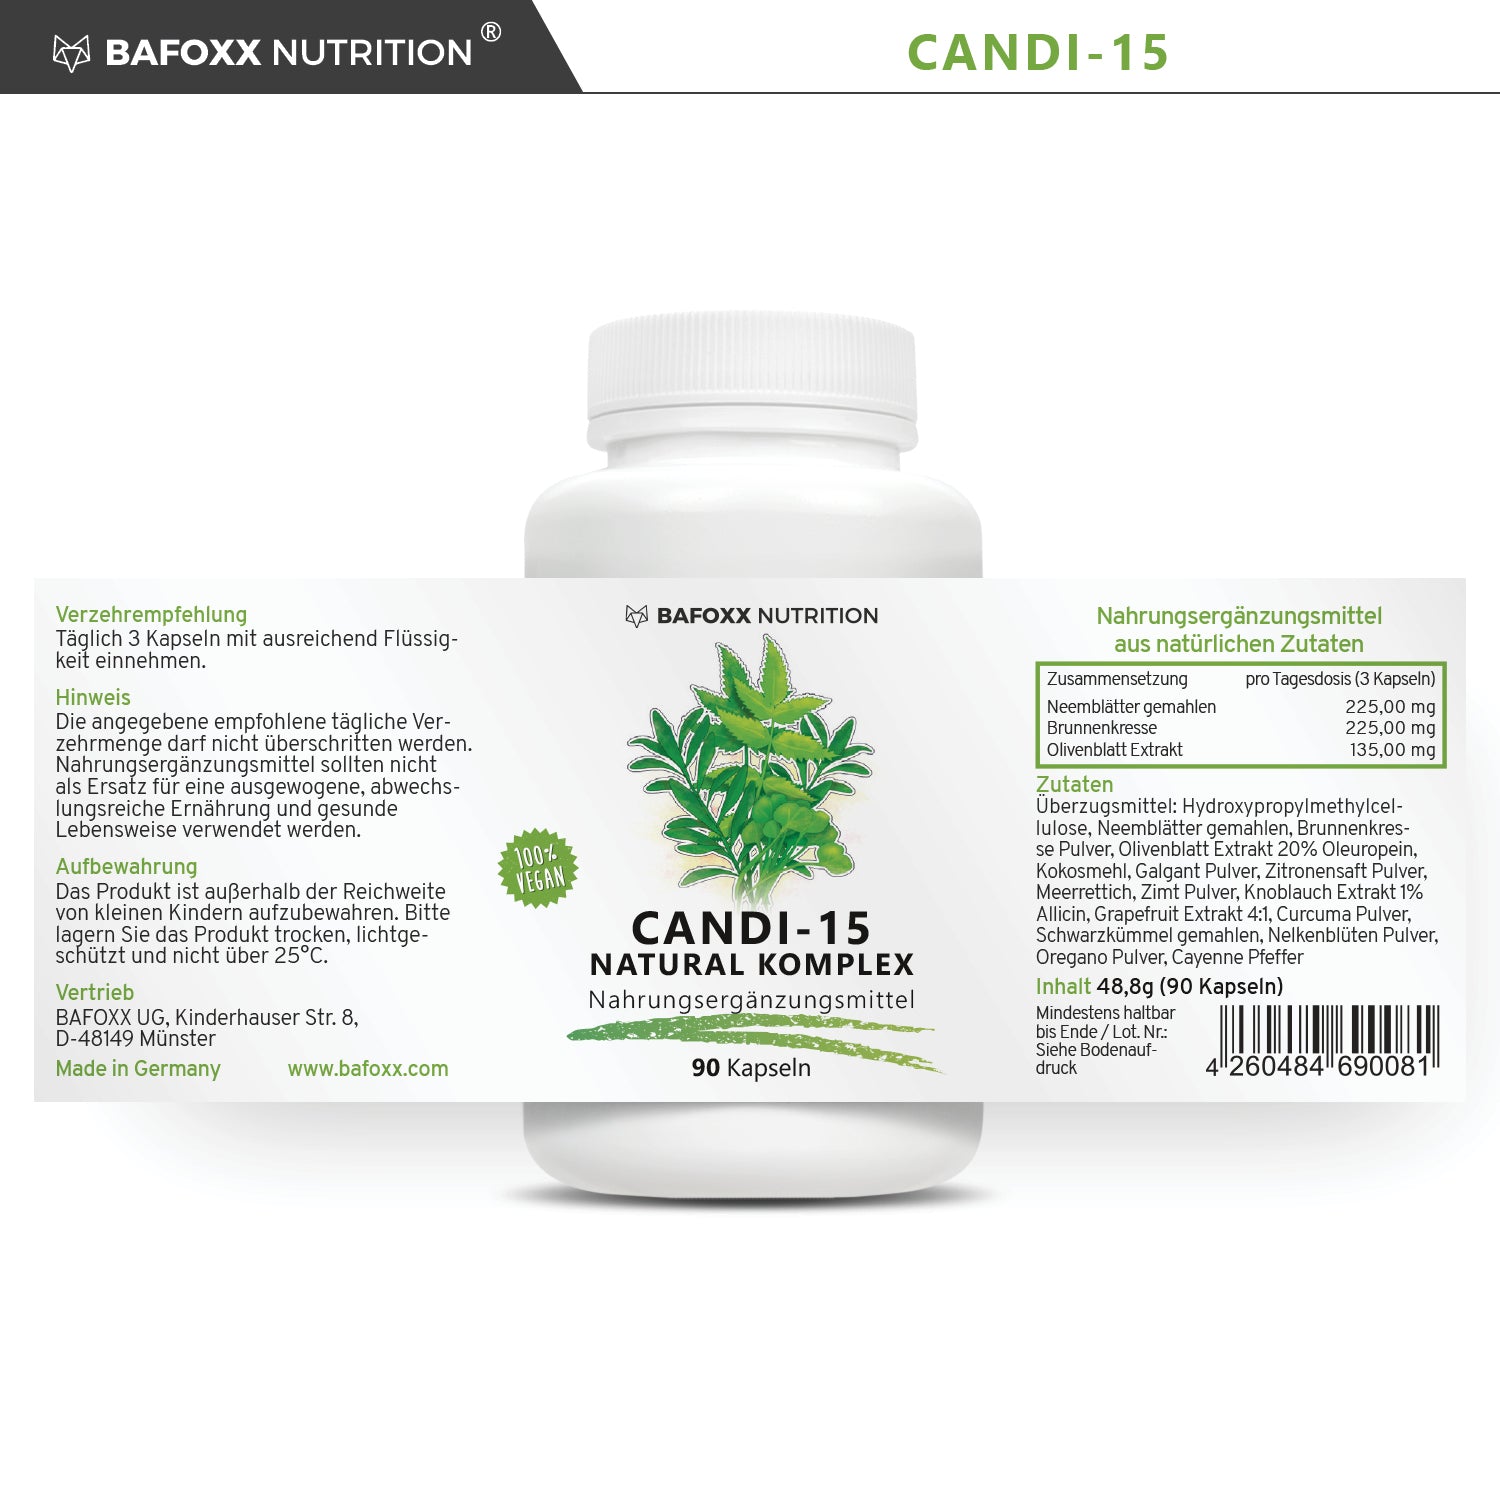 Candi-15 Natural Komplex